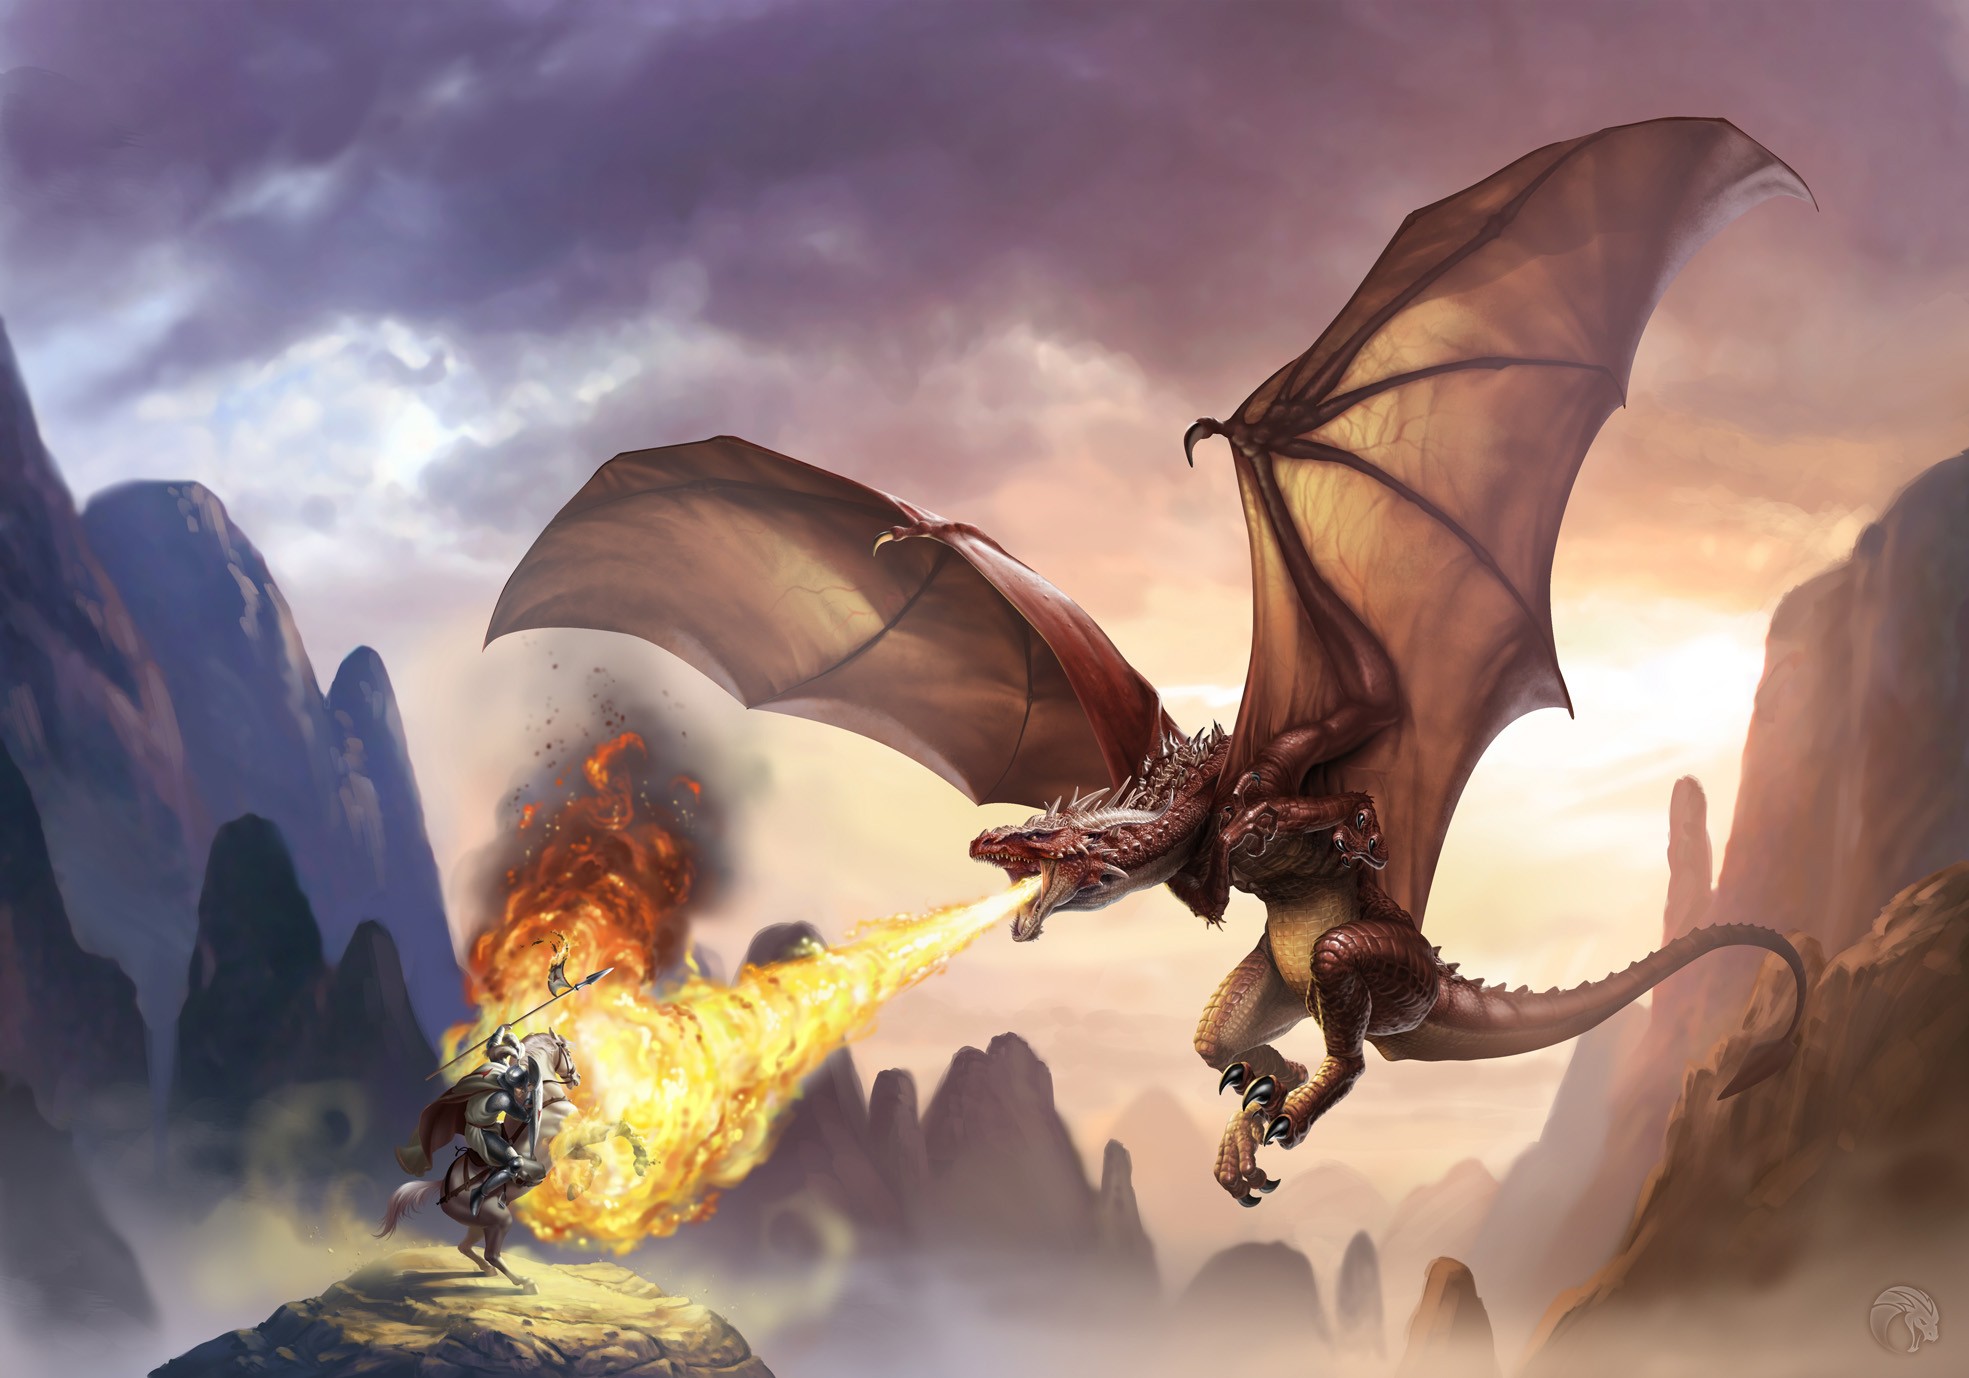 General 1969x1378 digital art fantasy art dragon wings rocks fire flying spear horse knight creature DeviantArt